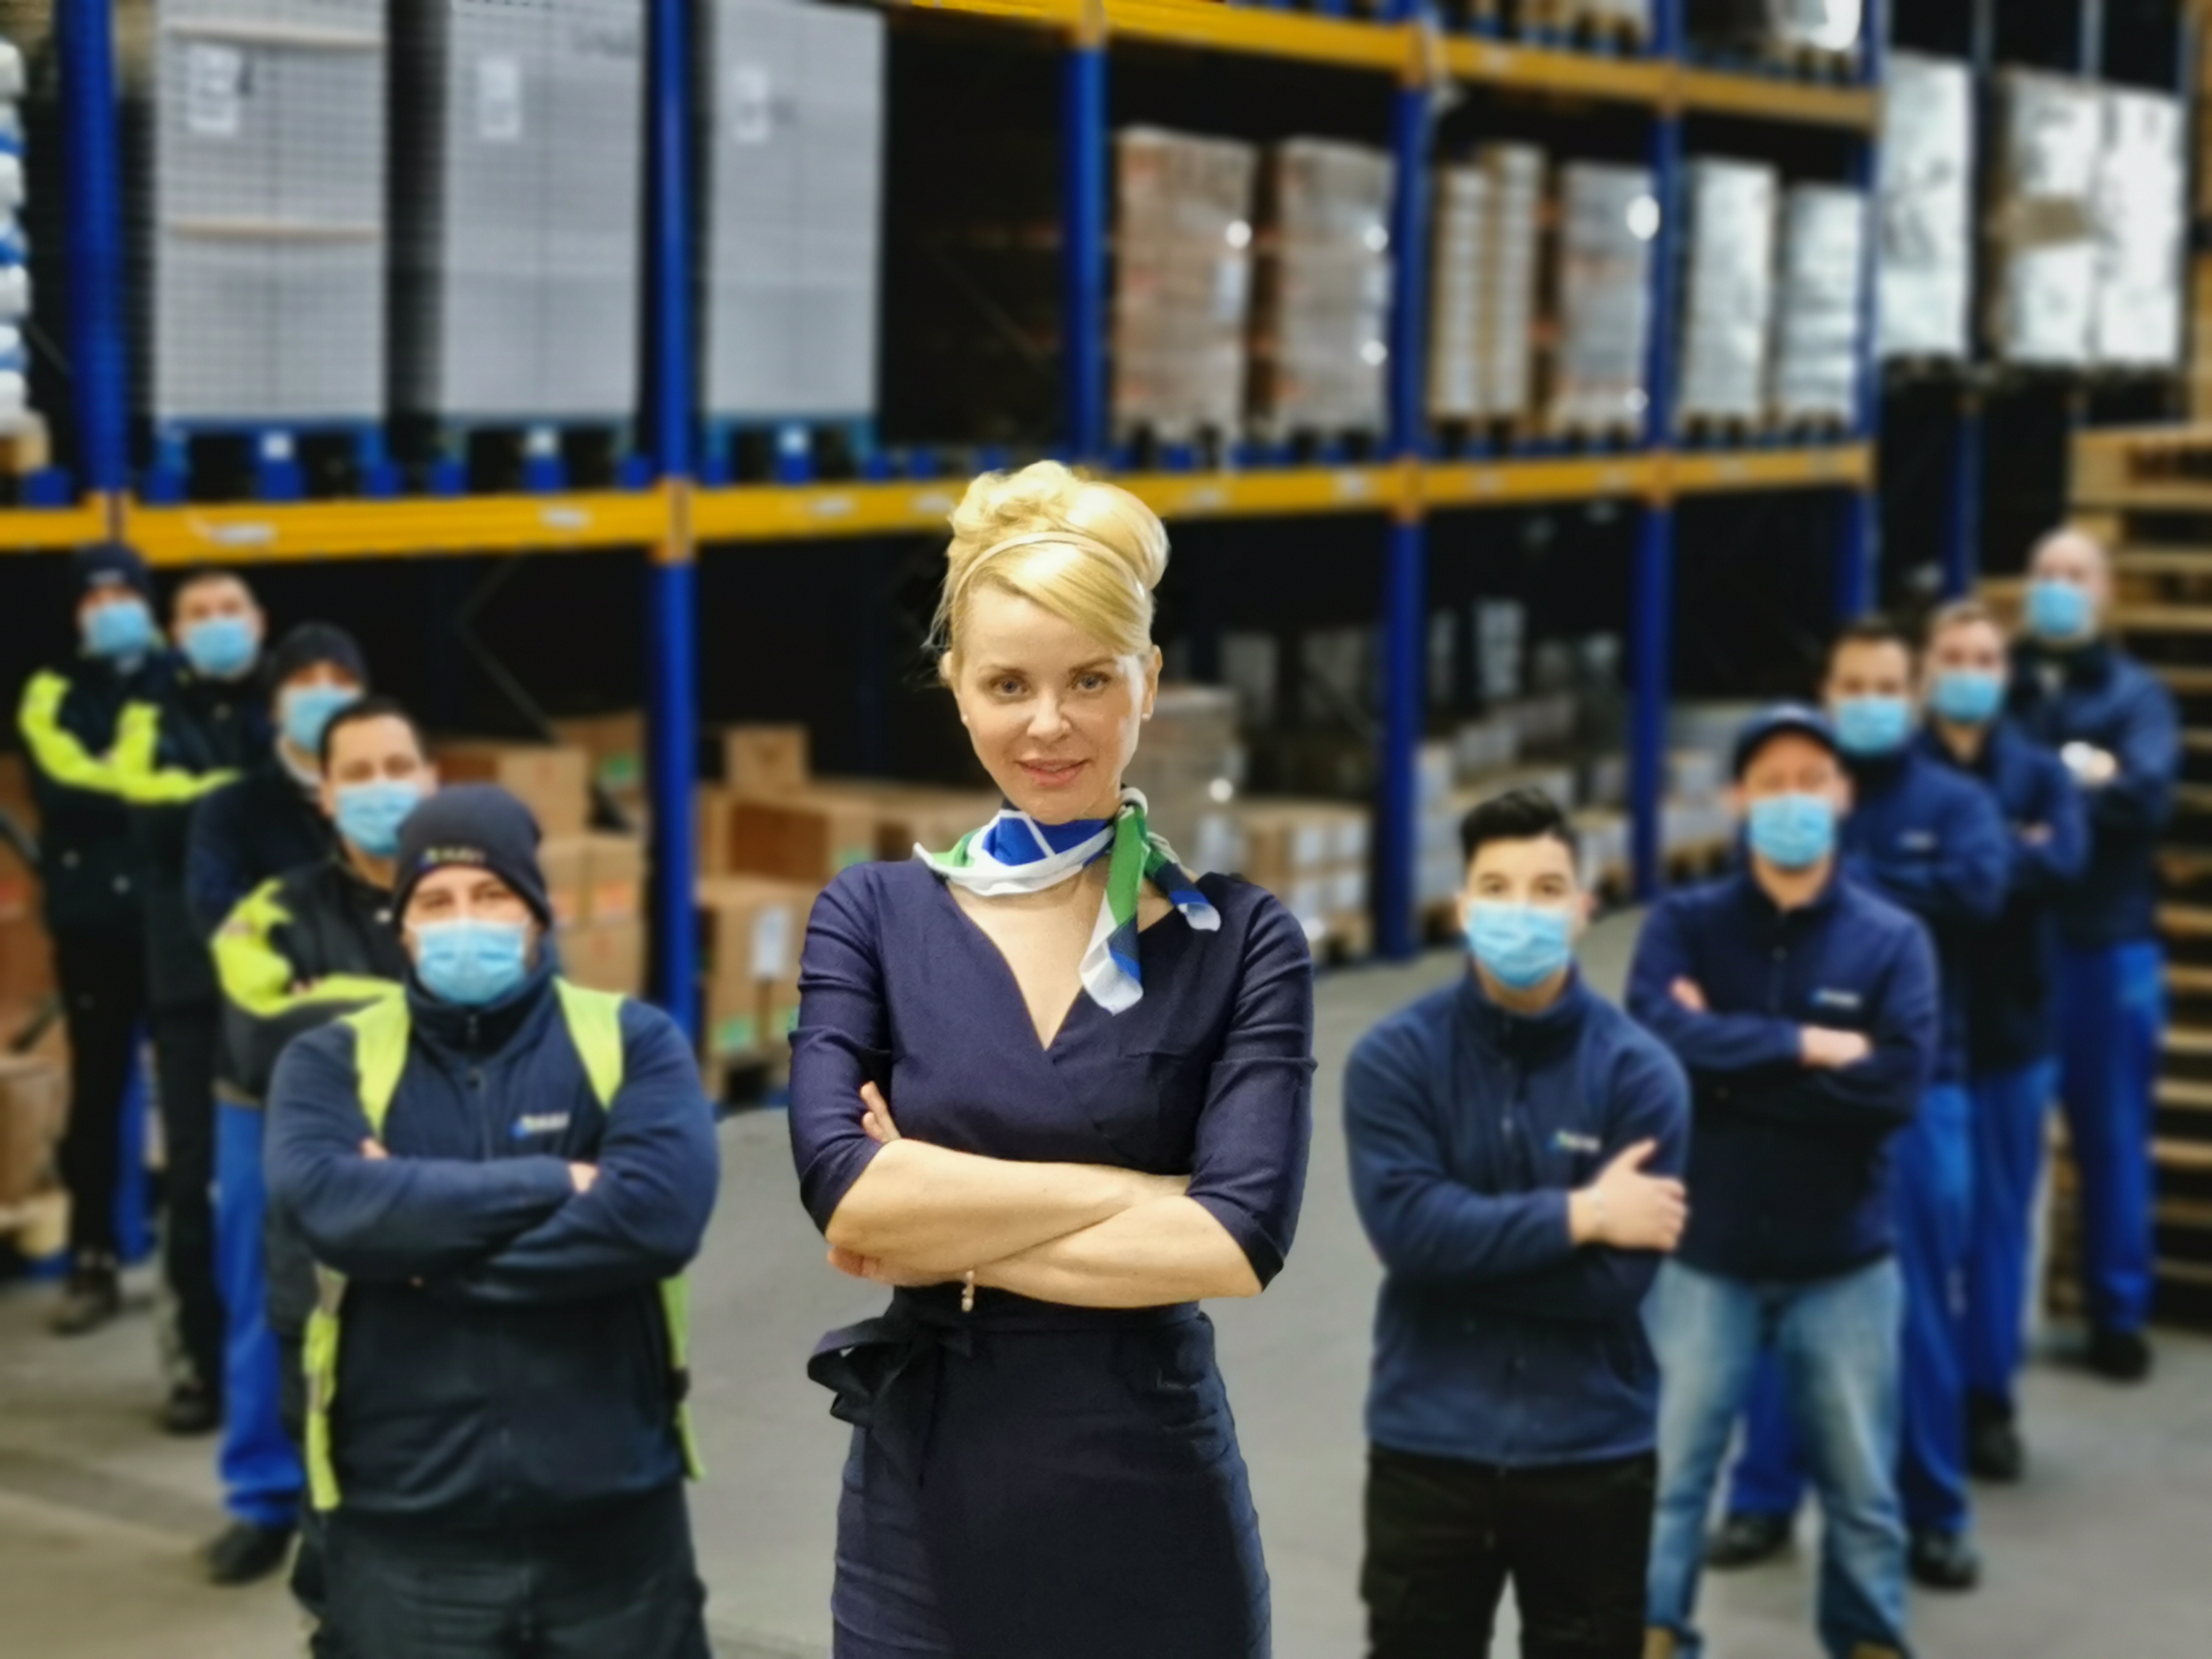 Women Warehouse Employees